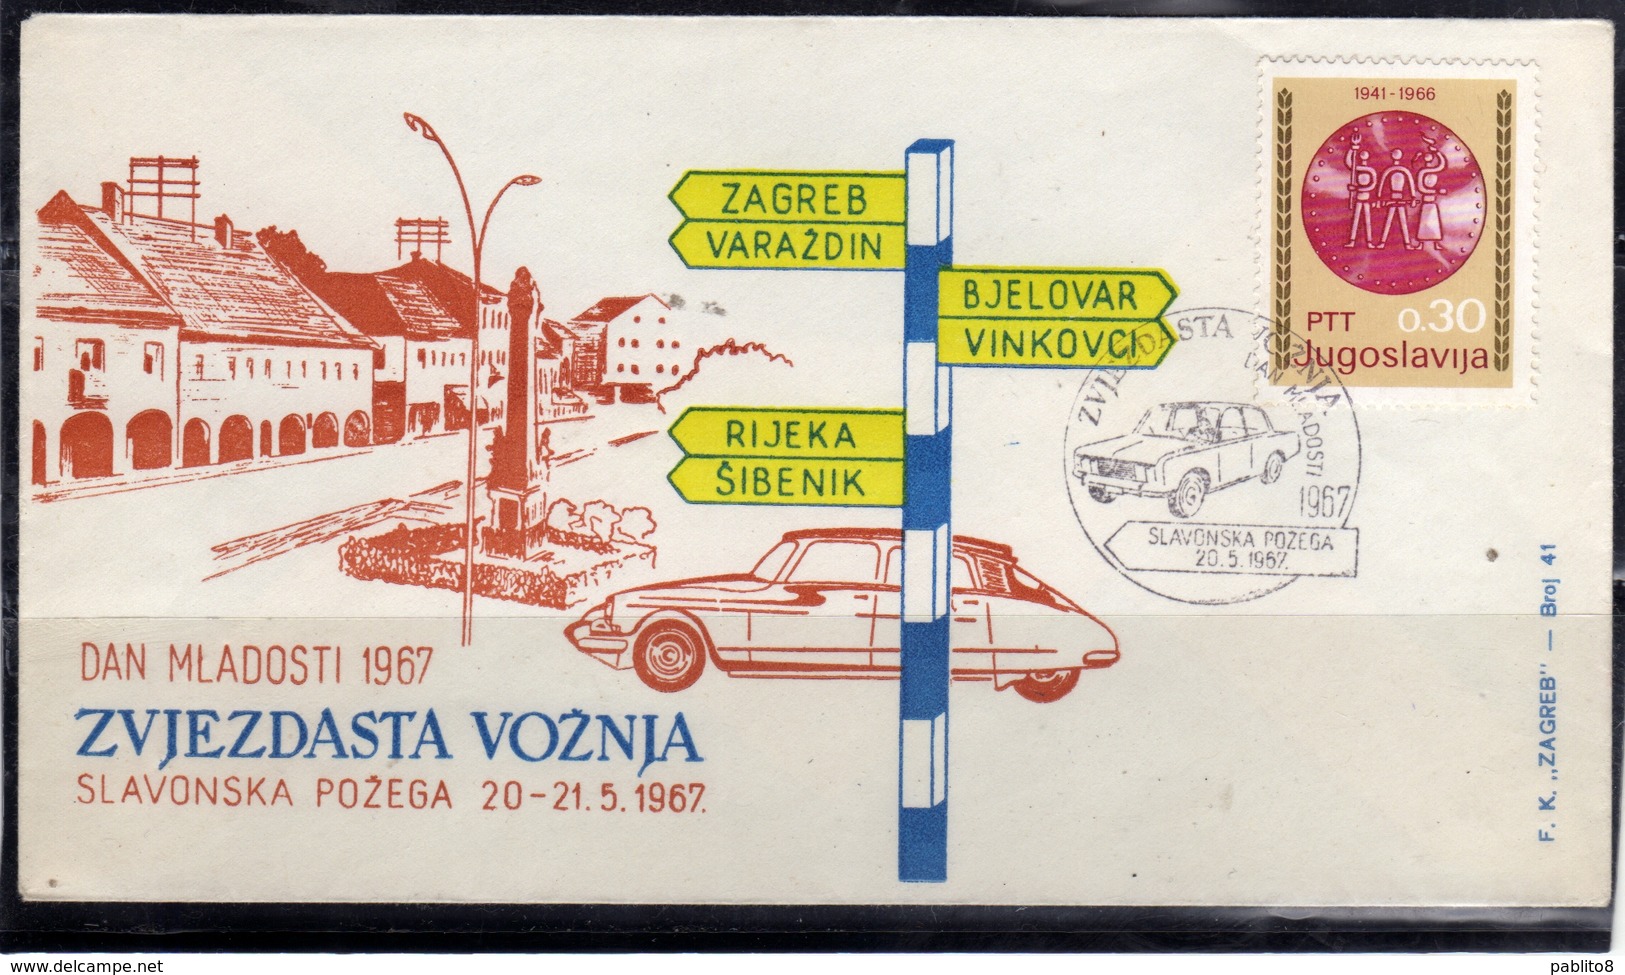 JUGOSLAVIA YUGOSLAVIA 20-21 5 1967 CARS RALLY DAN MLADOSTI COVER SPECIAL CANCEL - Storia Postale